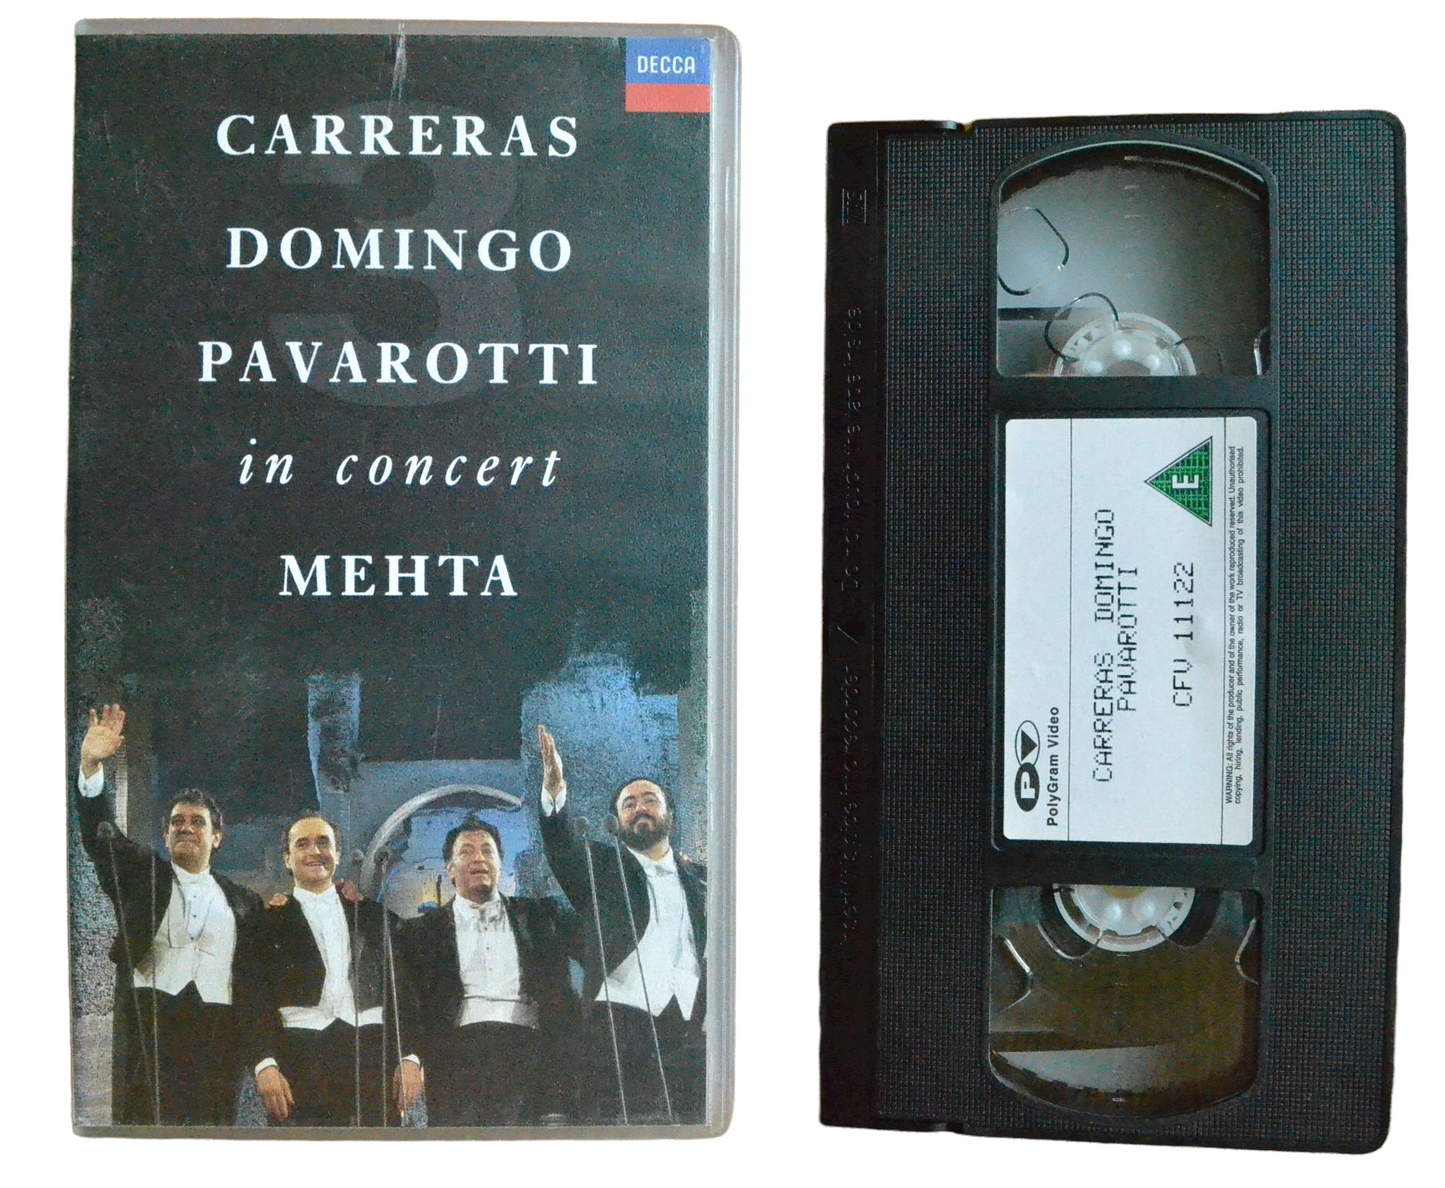 Carreras Domingo Pavarotti in Concert MEHTA - José Carreras - Decca - Music - Pal VHS-